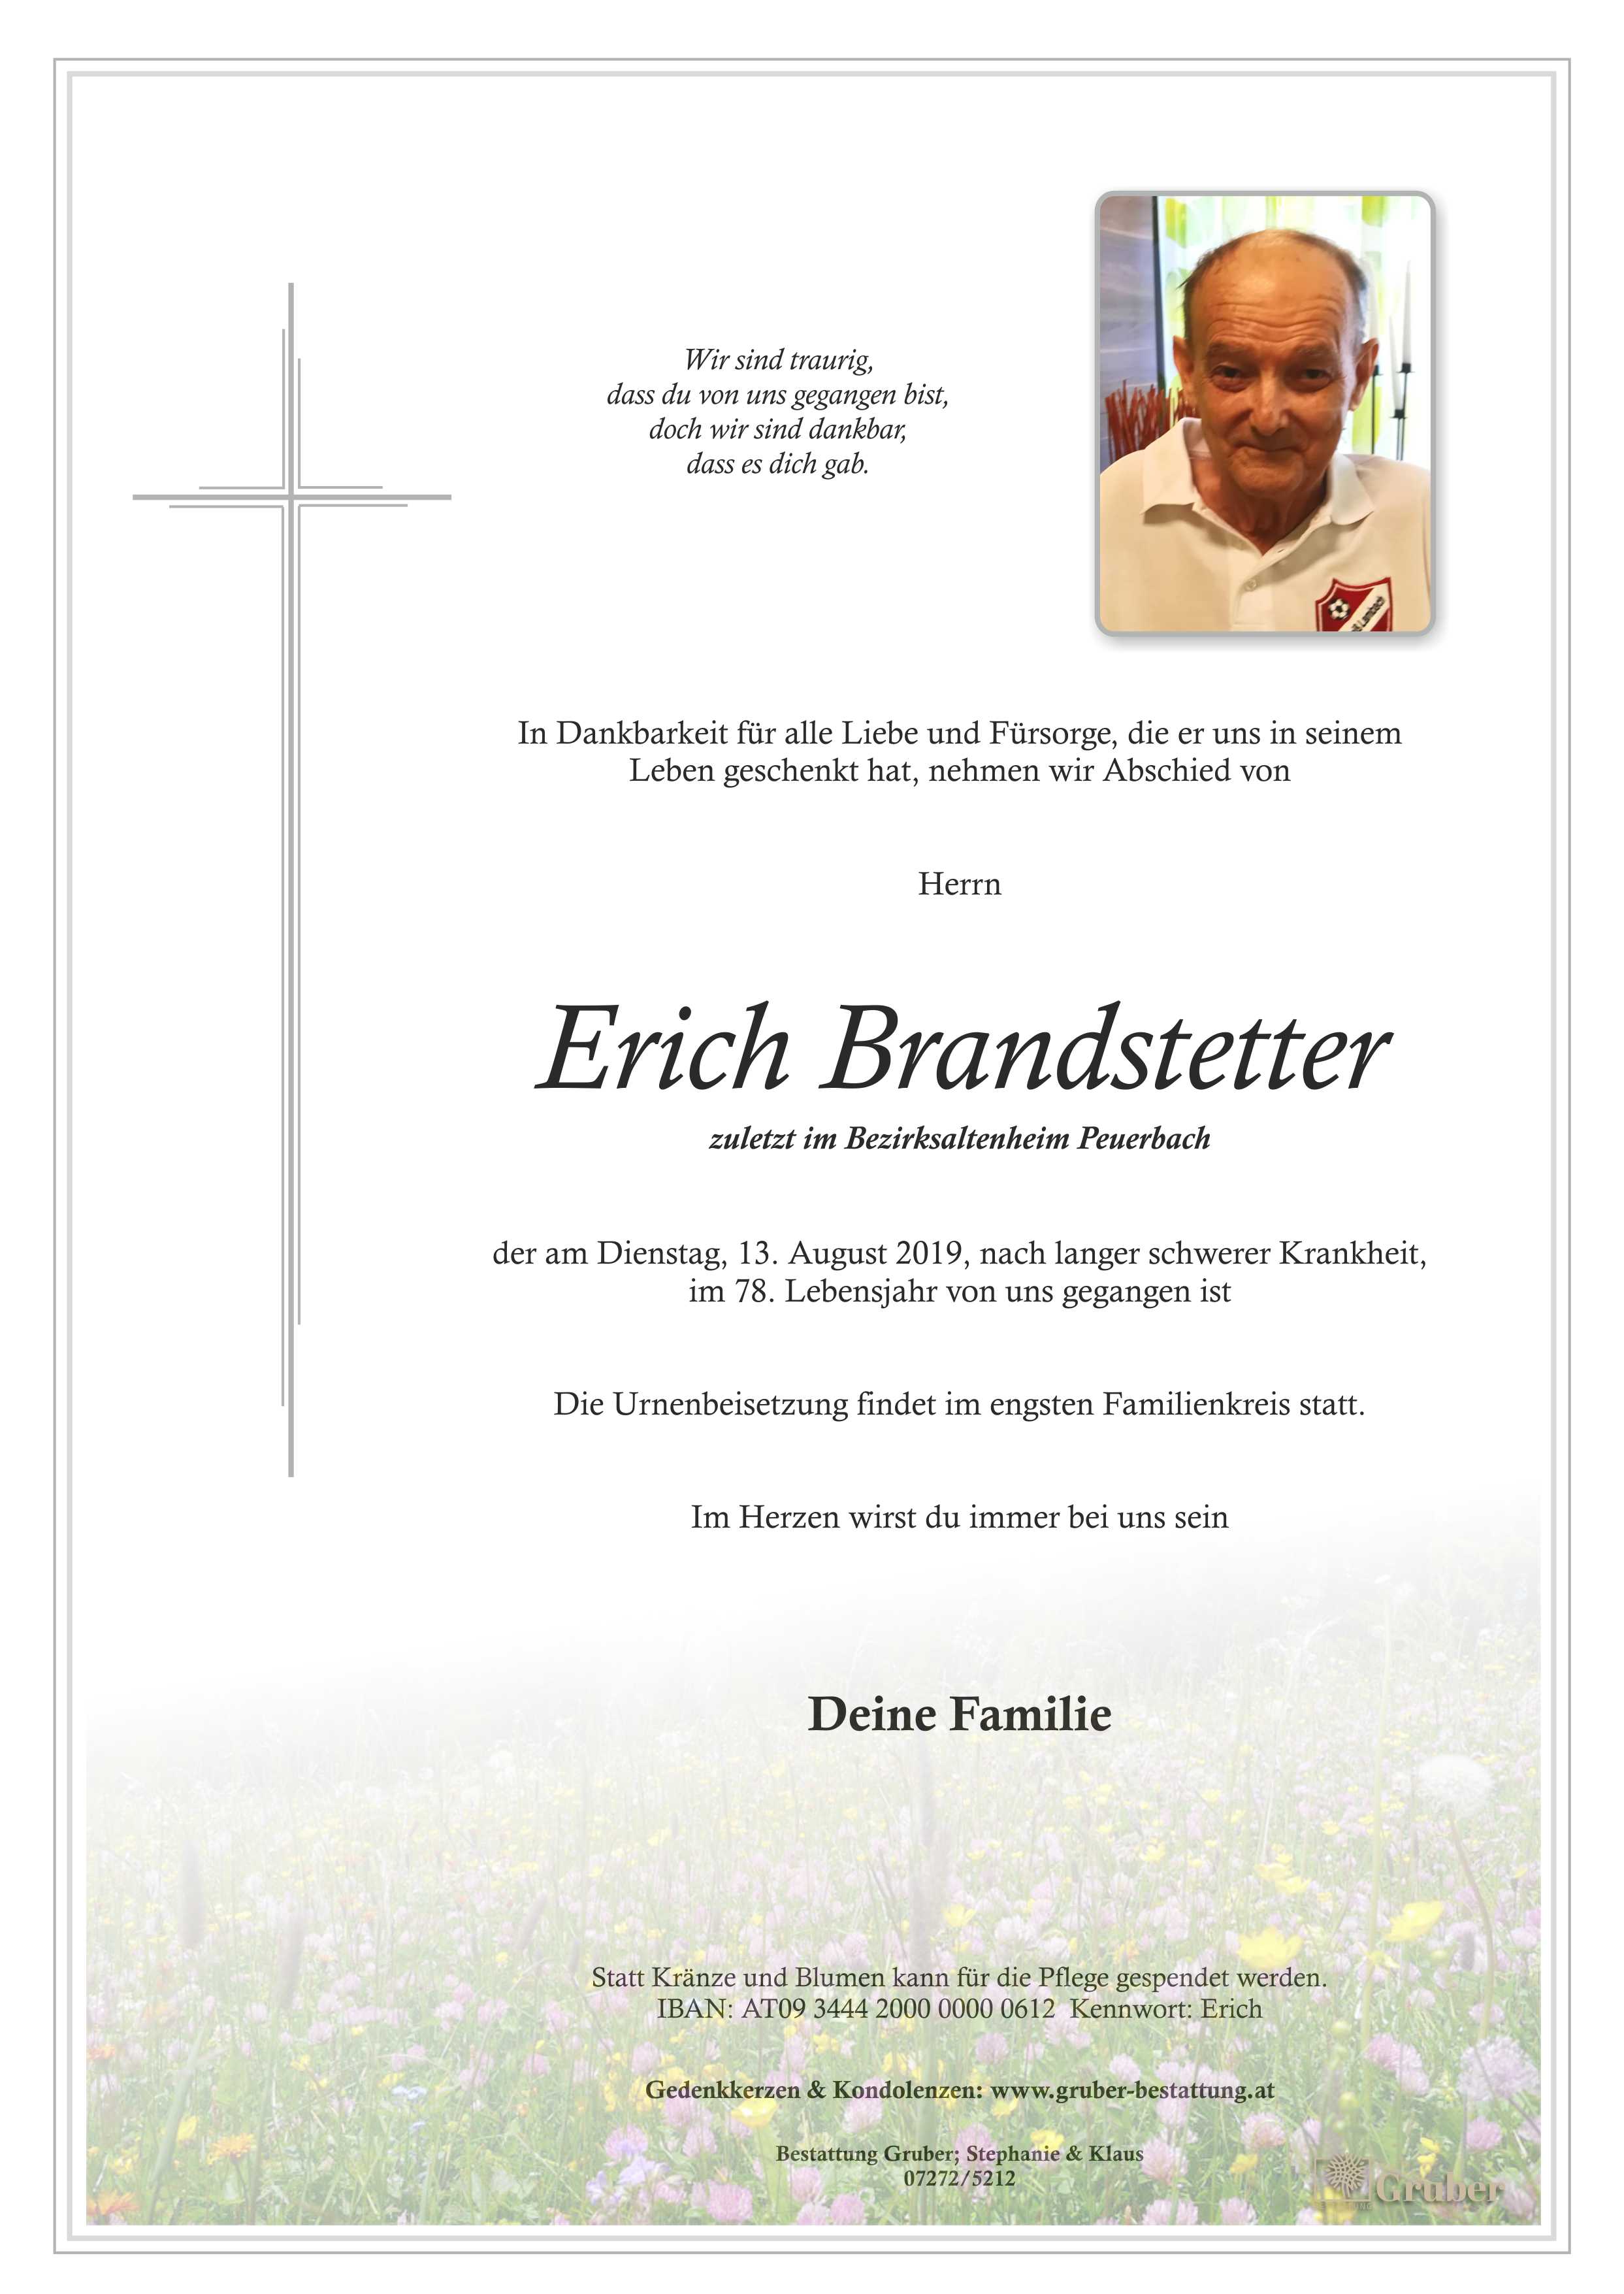 Erich Brandstetter (Peuerbach)